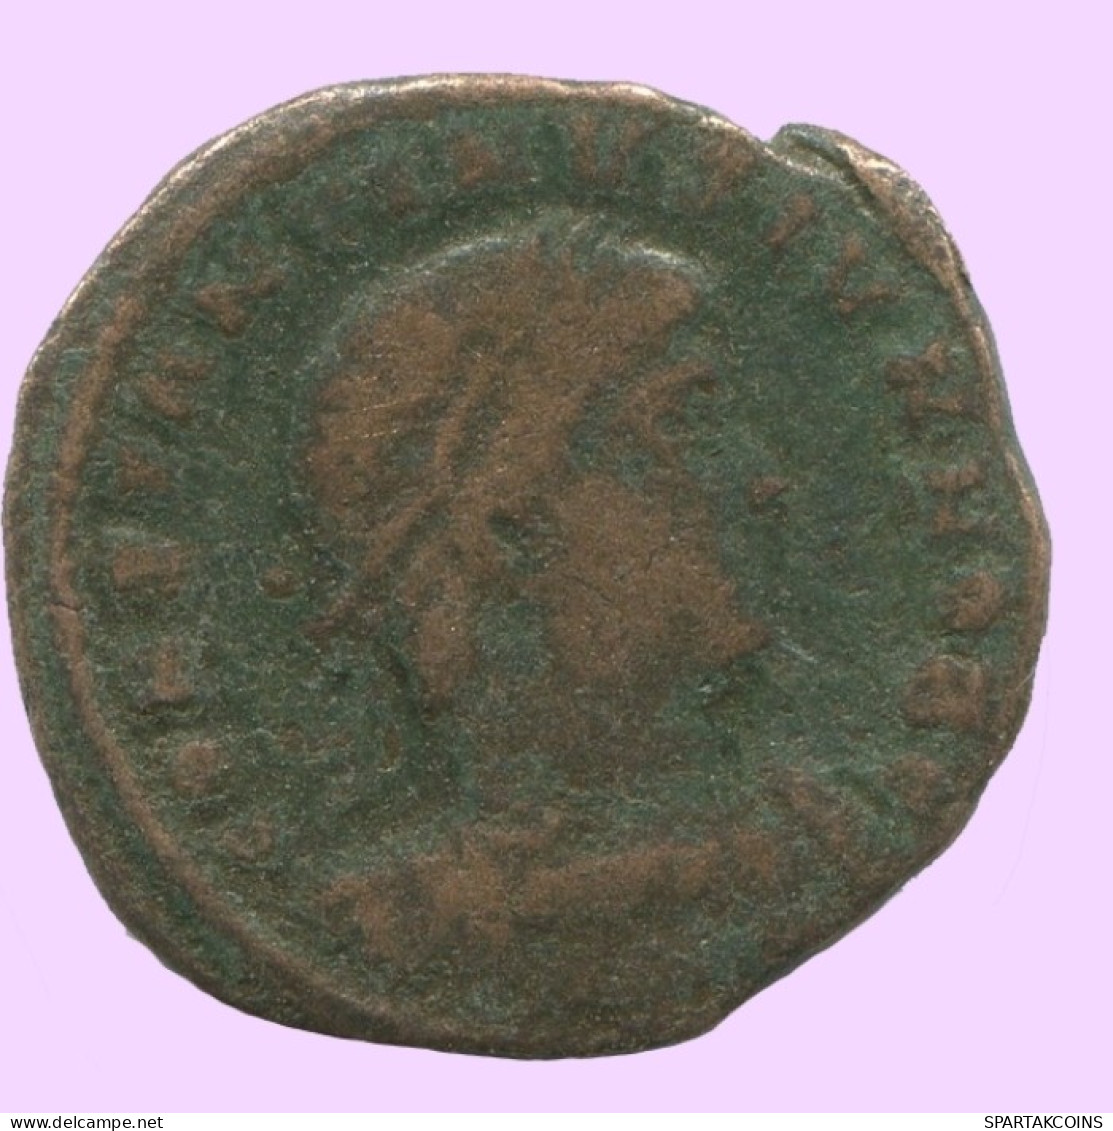 LATE ROMAN EMPIRE Follis Antique Authentique Roman Pièce 2.6g/18mm #ANT2093.7.F.A - Der Spätrömanischen Reich (363 / 476)